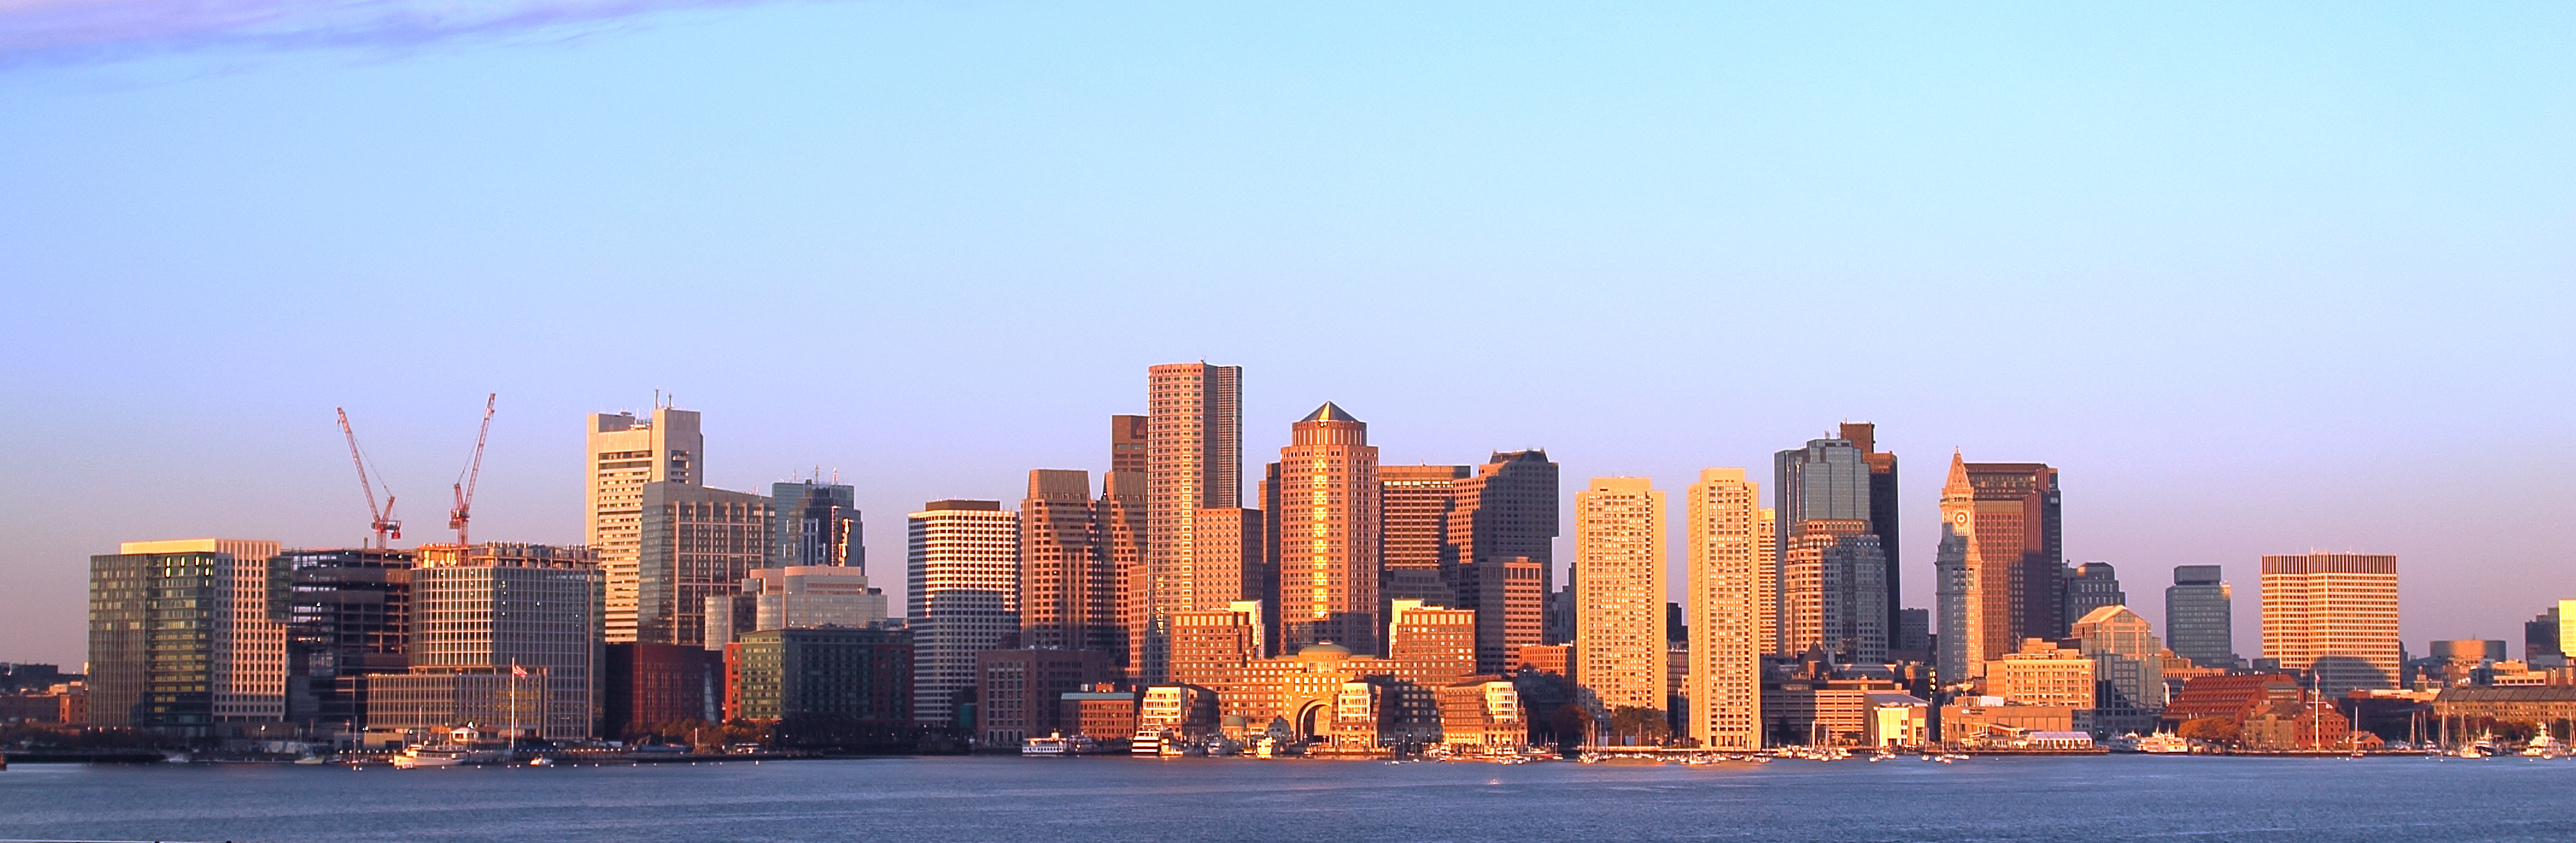 File:Boston skyline at earlymorning.jpg - Wikimedia Commons